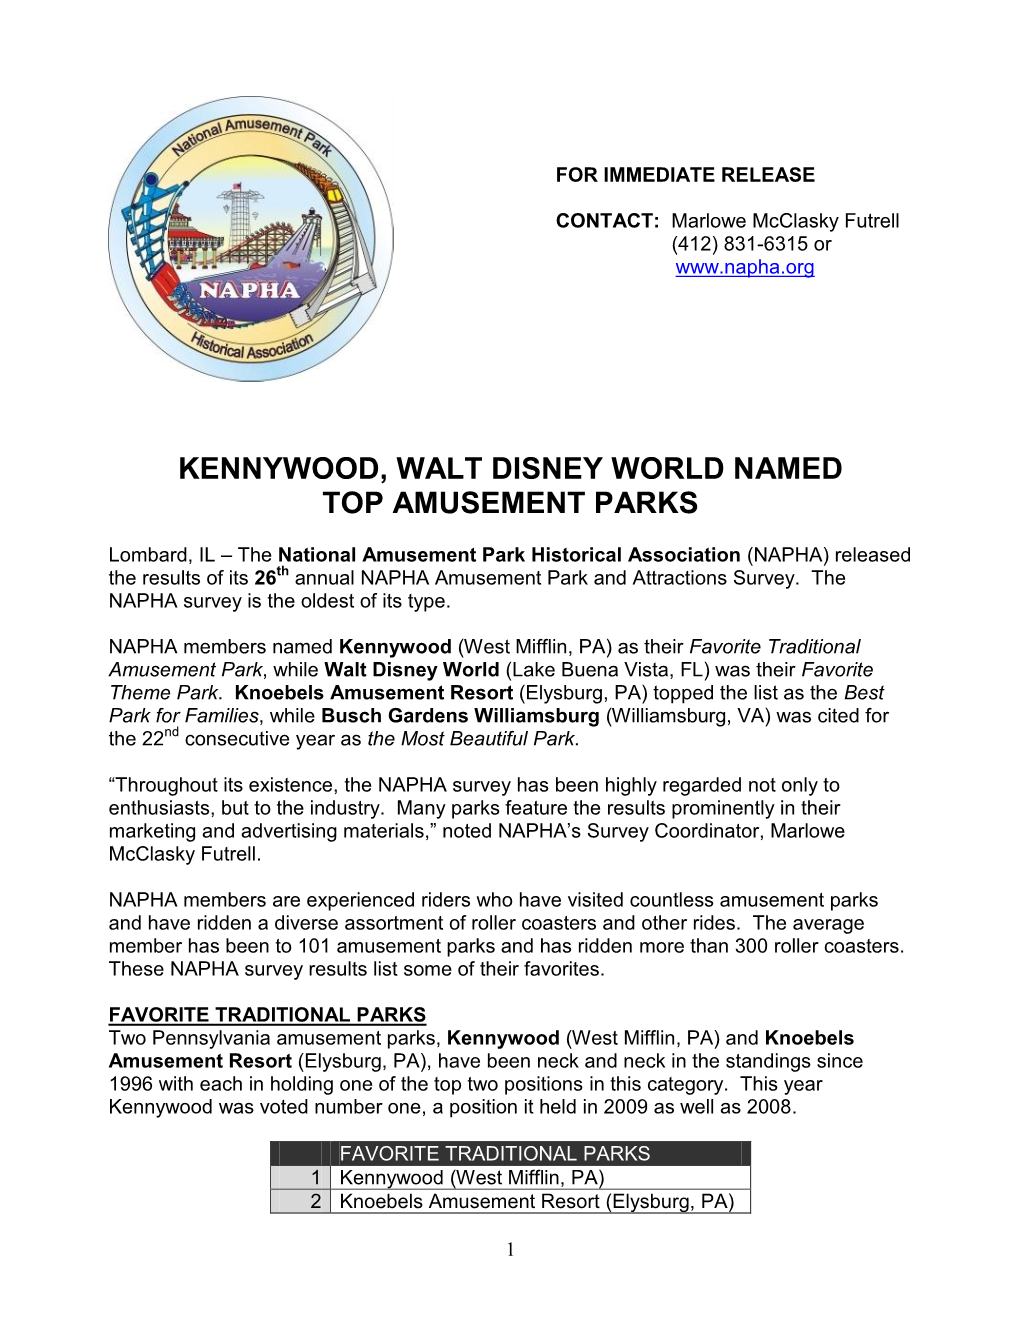 Kennywood, Walt Disney World Named Top Amusement Parks